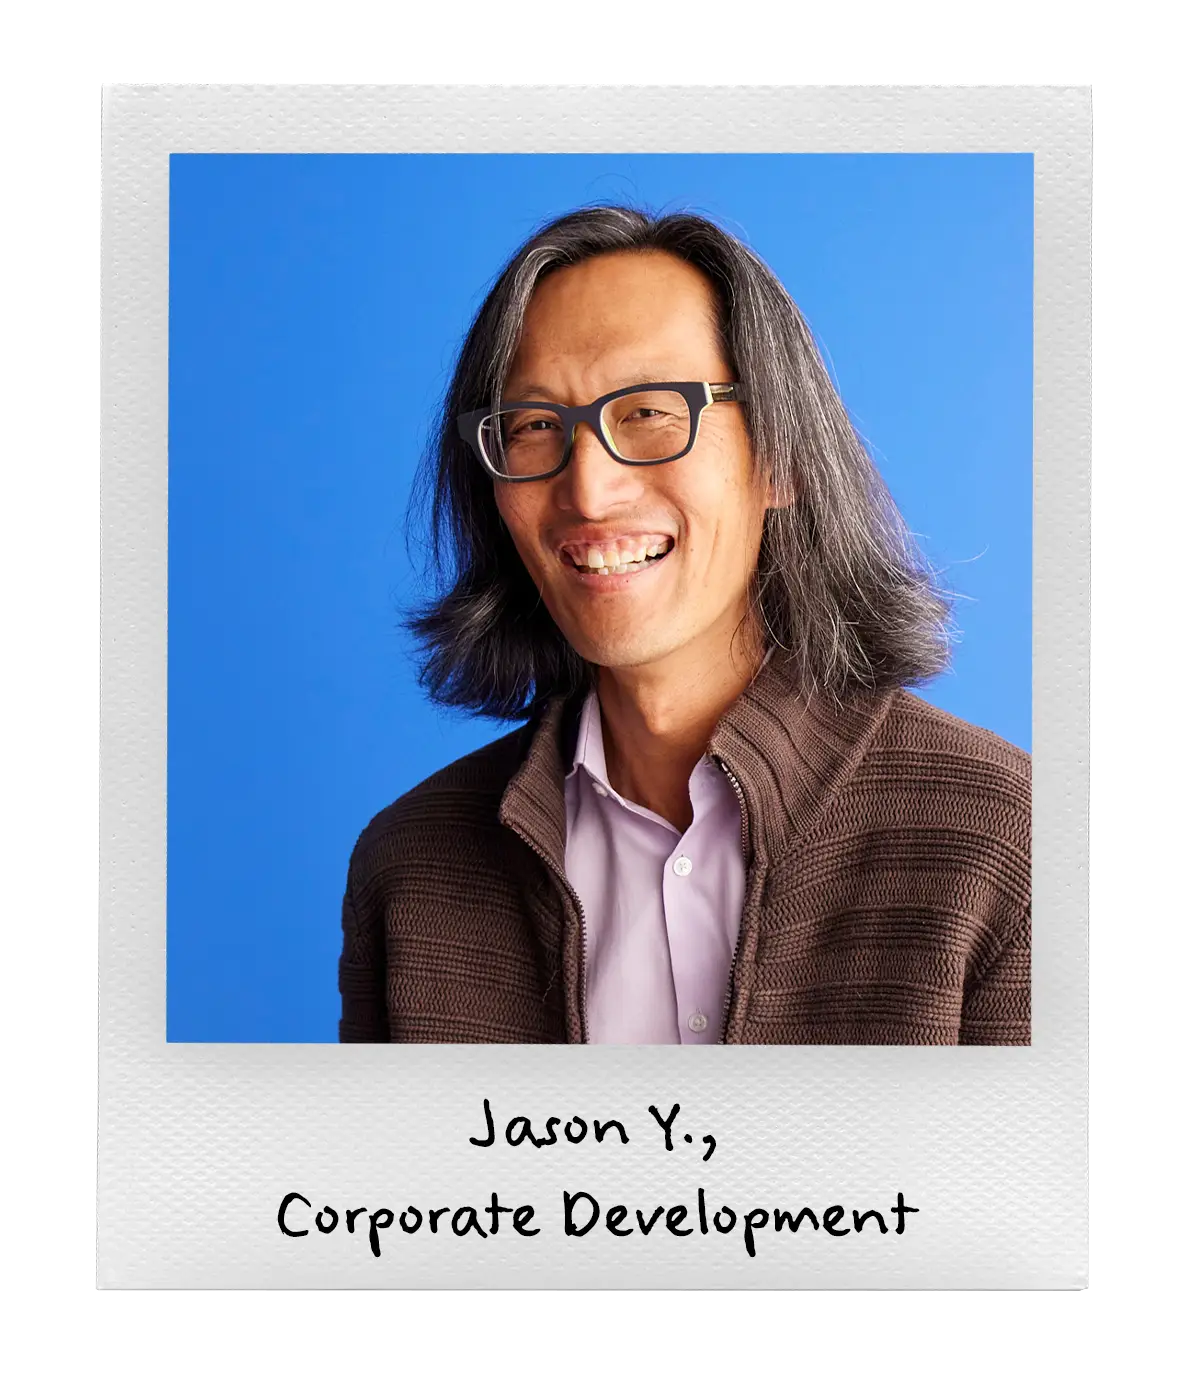 Jason Y., Corporate Development